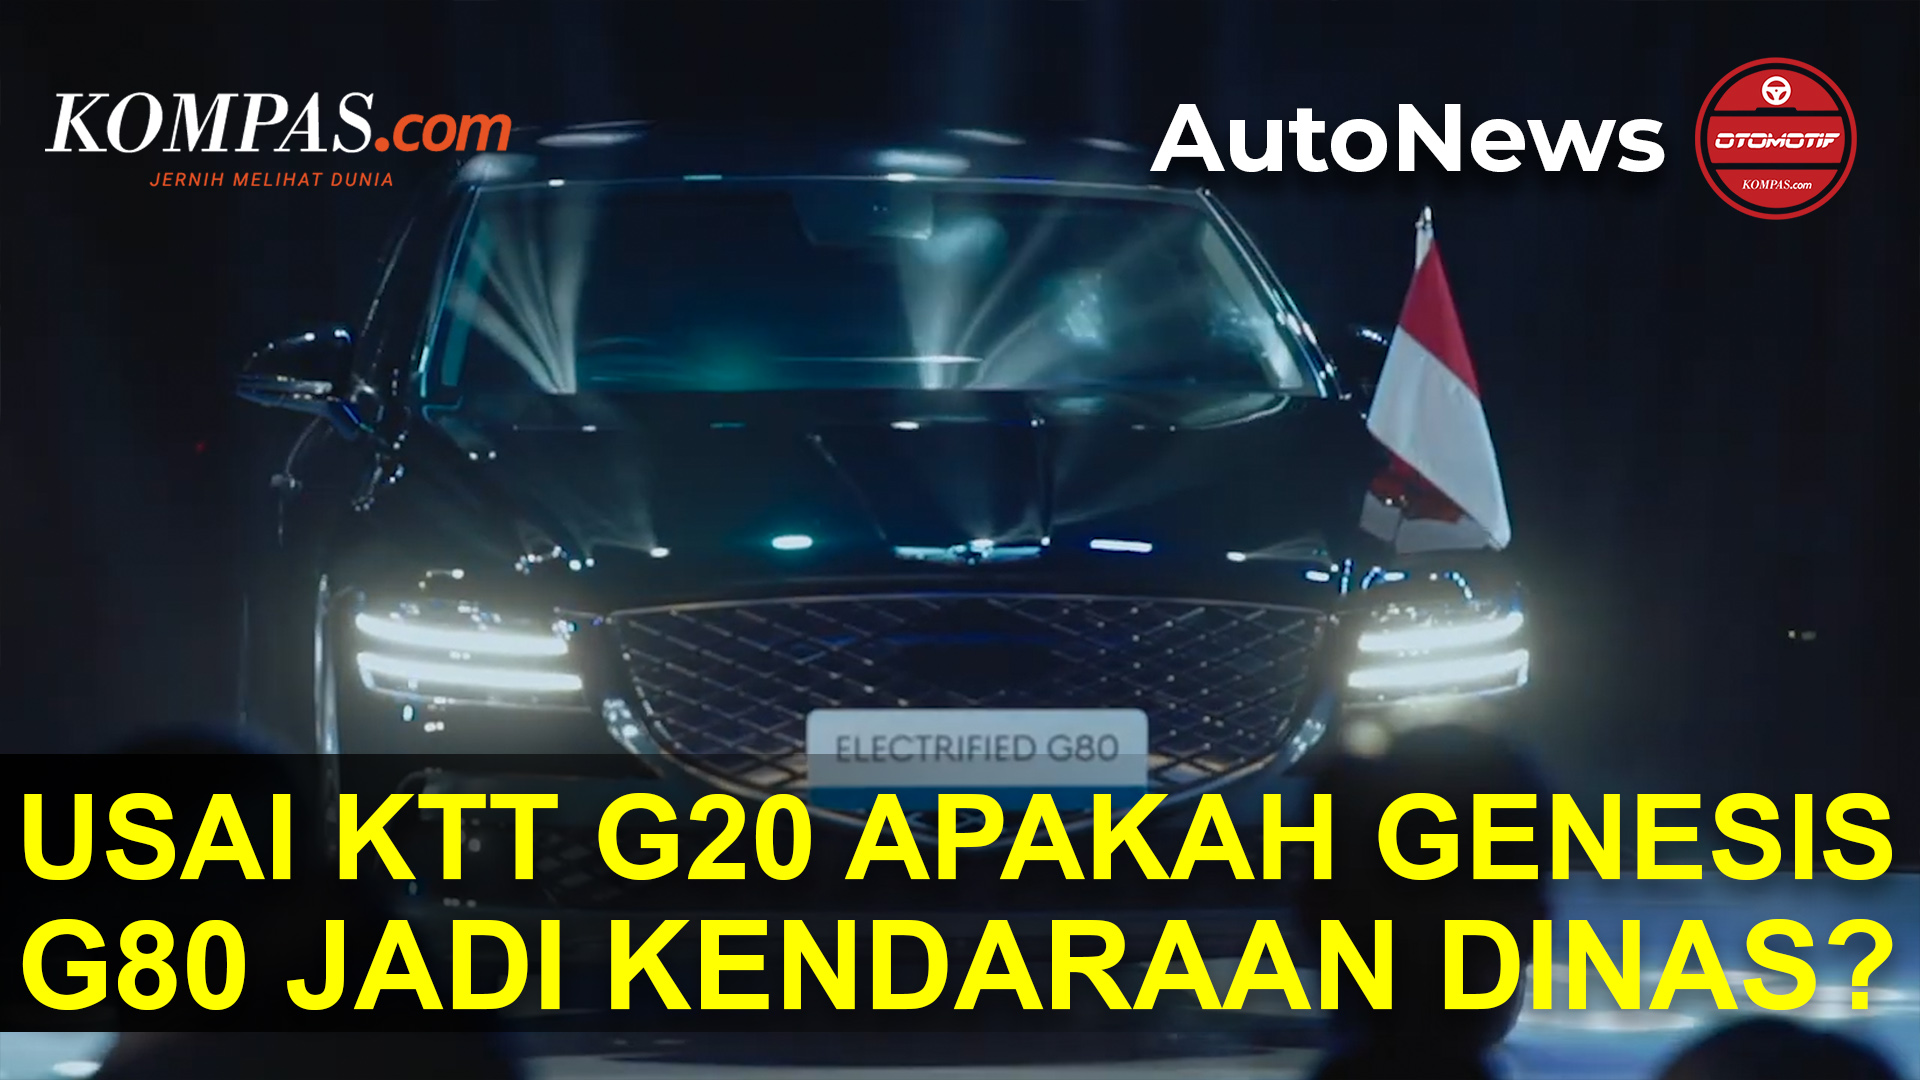 Genesis G80 Bekas KTT G20 Bakal Jadi Kendaraan Dinas?